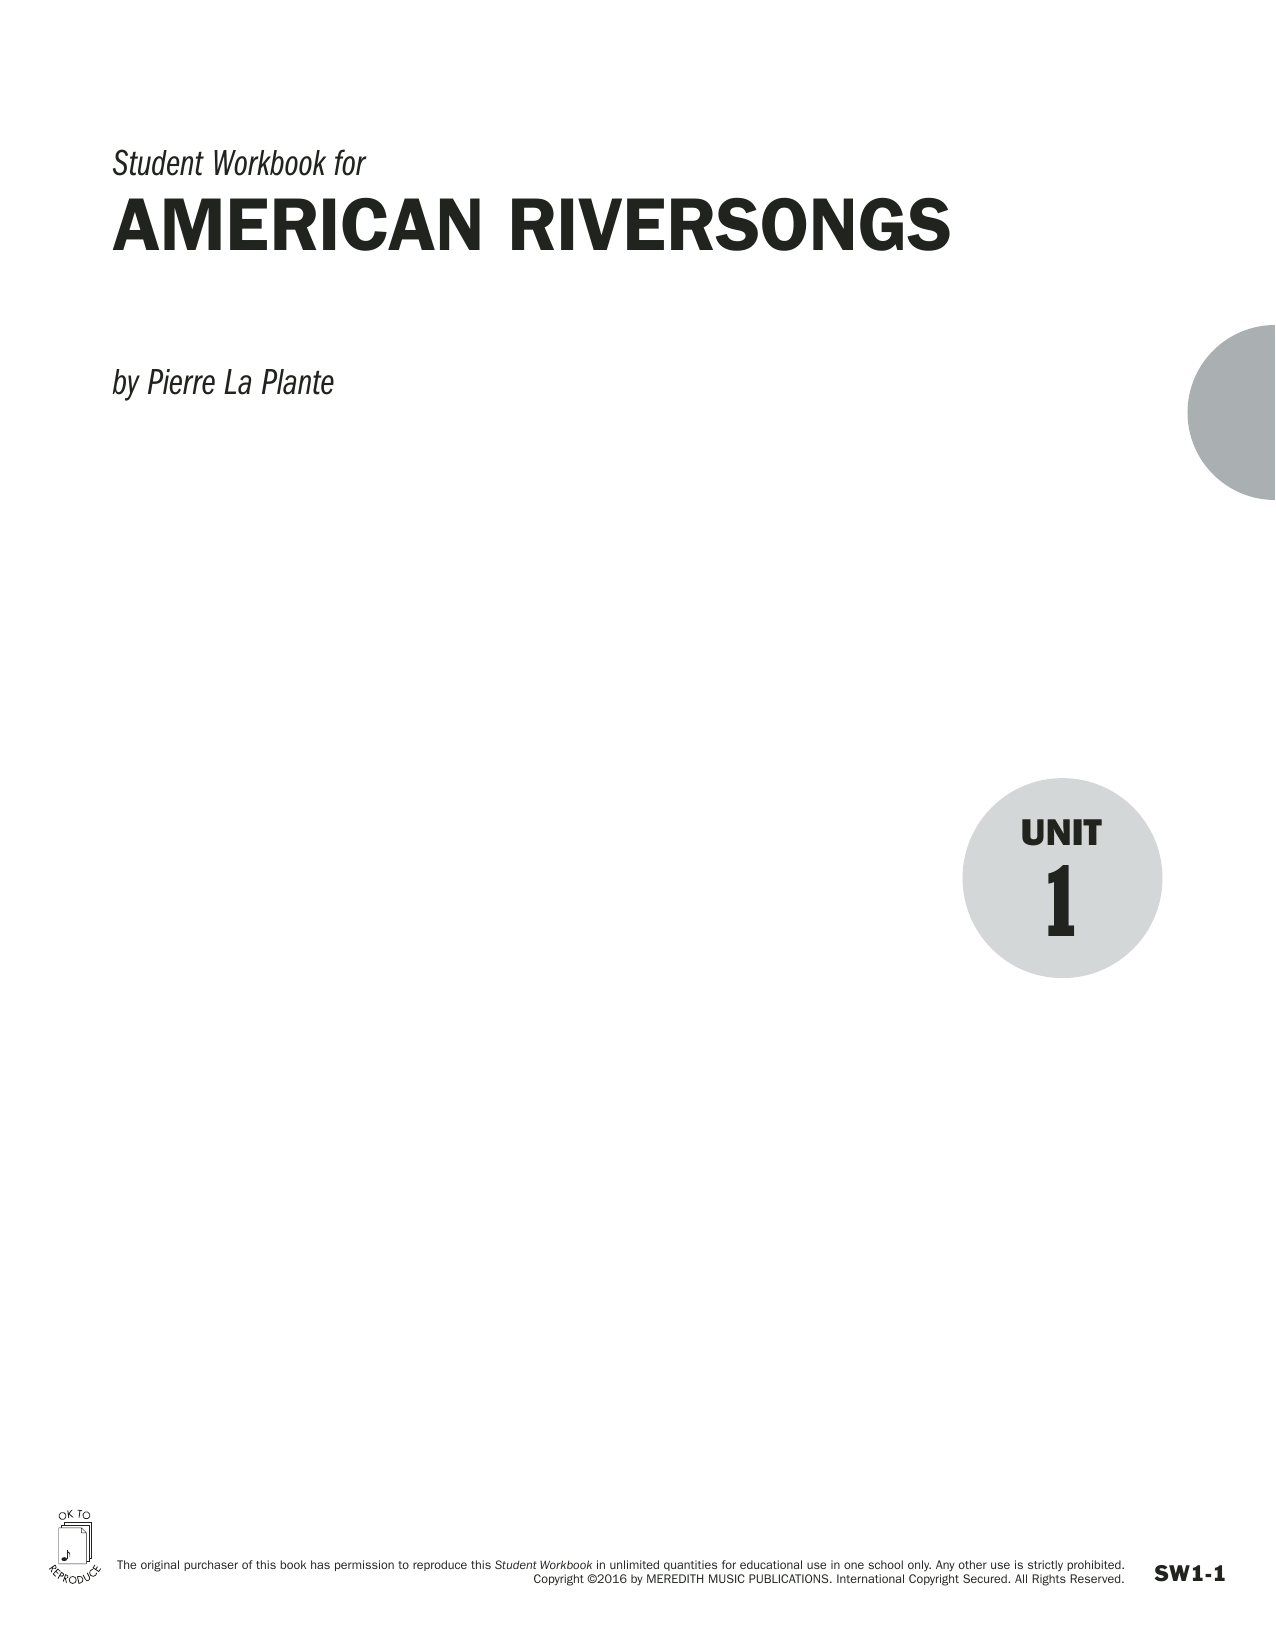 Guides to Band Masterworks, Vol. 6 - Student Workbook - American Riversongs (Instrumental Method) von Pierre La Plante